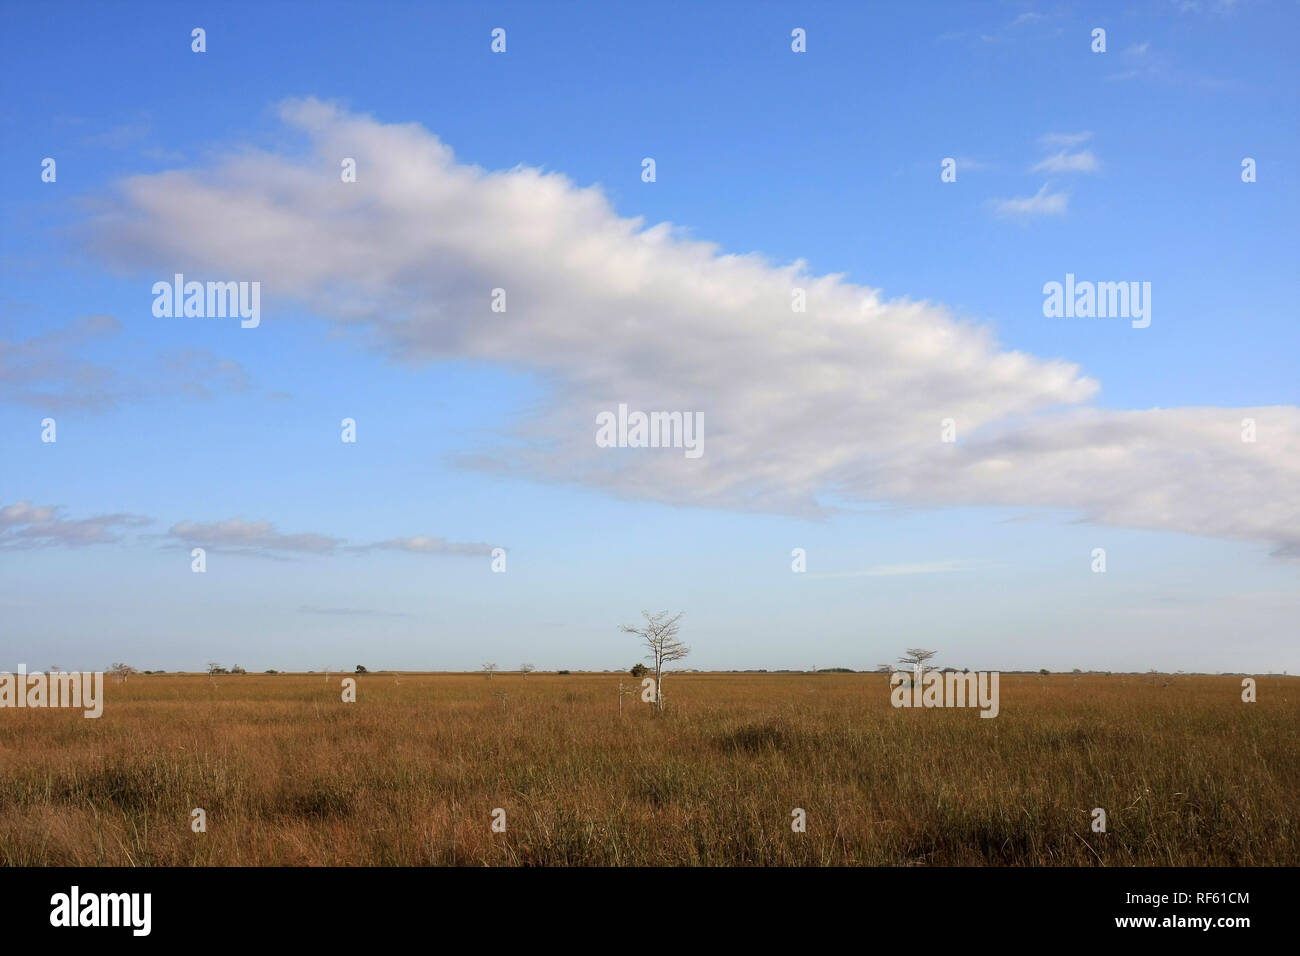 The Sawgrass Prairie of Everglades National Park, Florida. Stock Photo